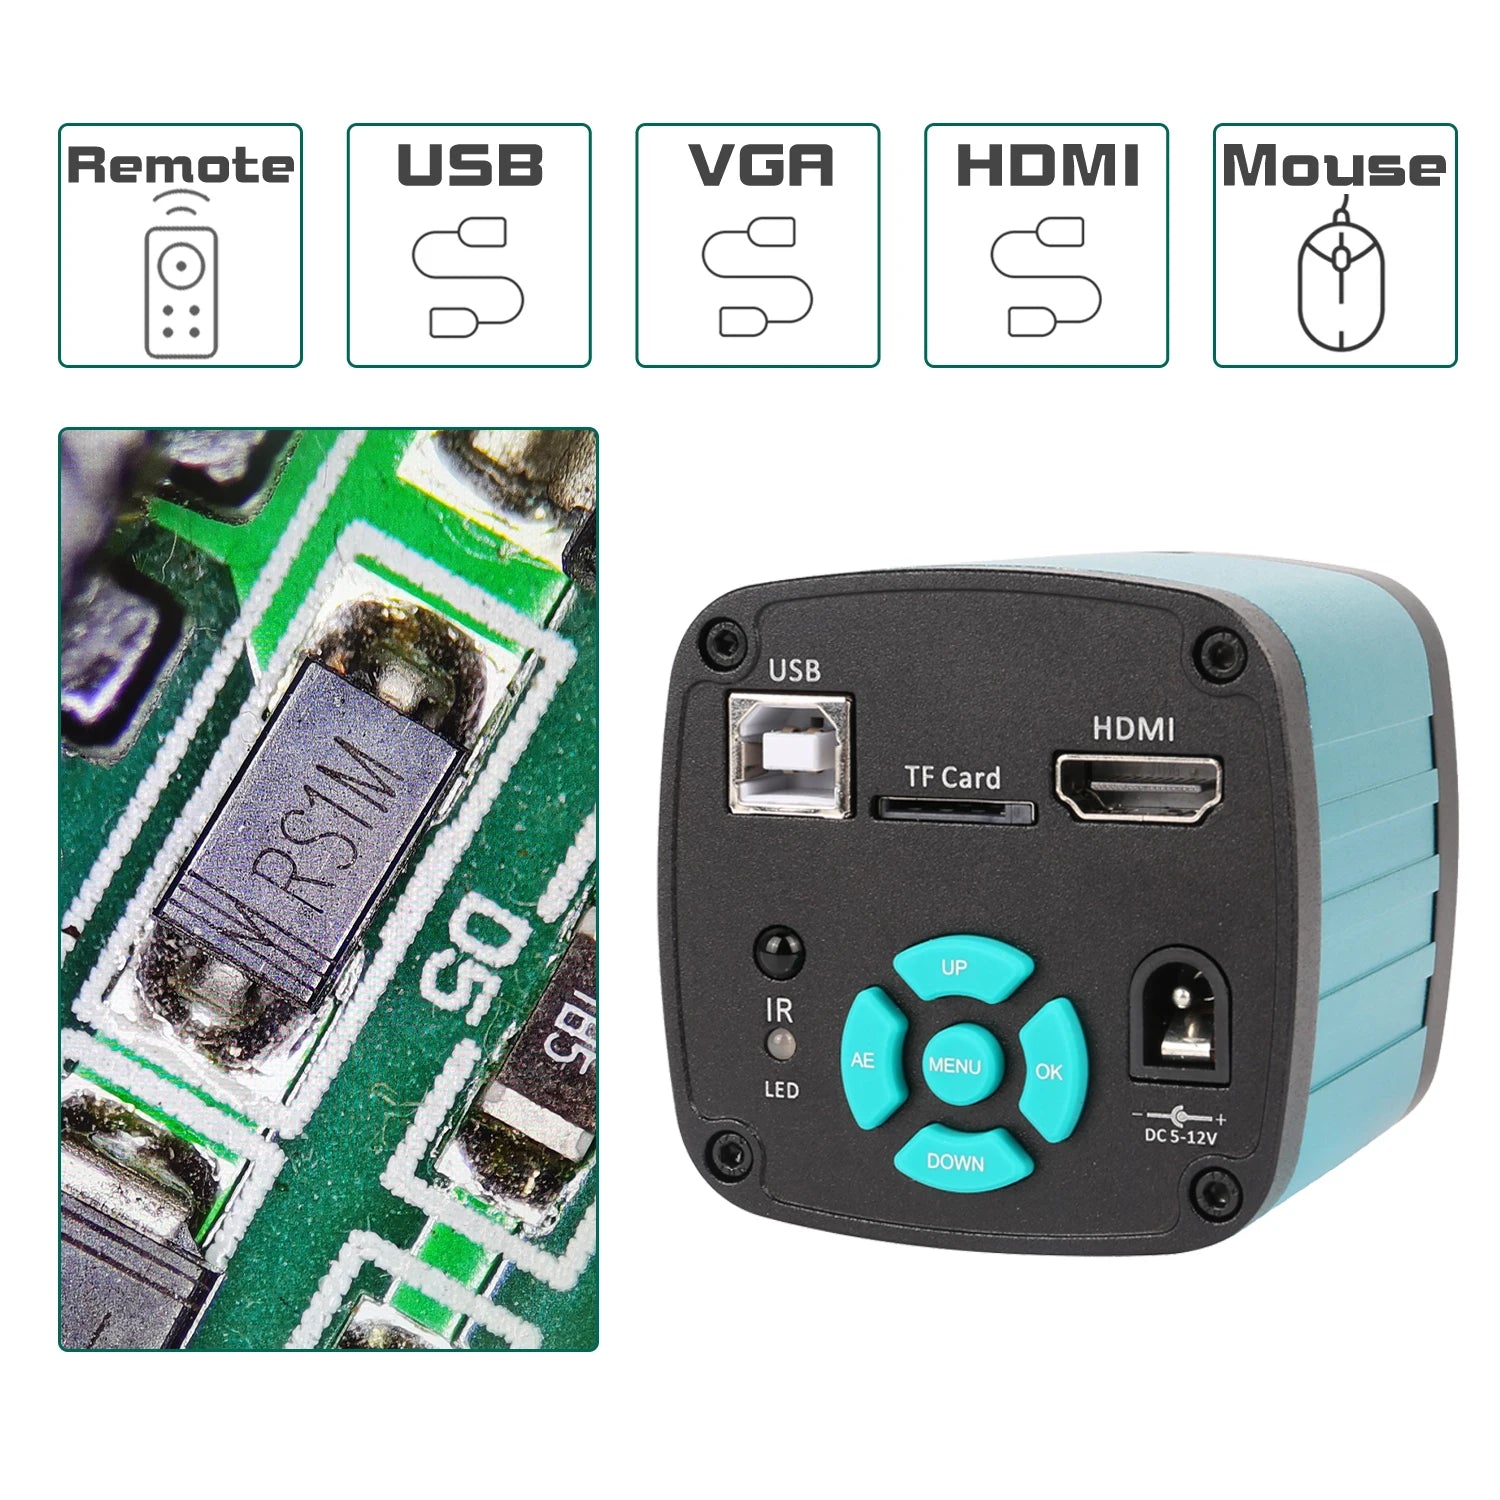 Camera pentru microscop industrial, conectivitate HDMI/USB/VGA, interval de zoom 1-150X/180X.